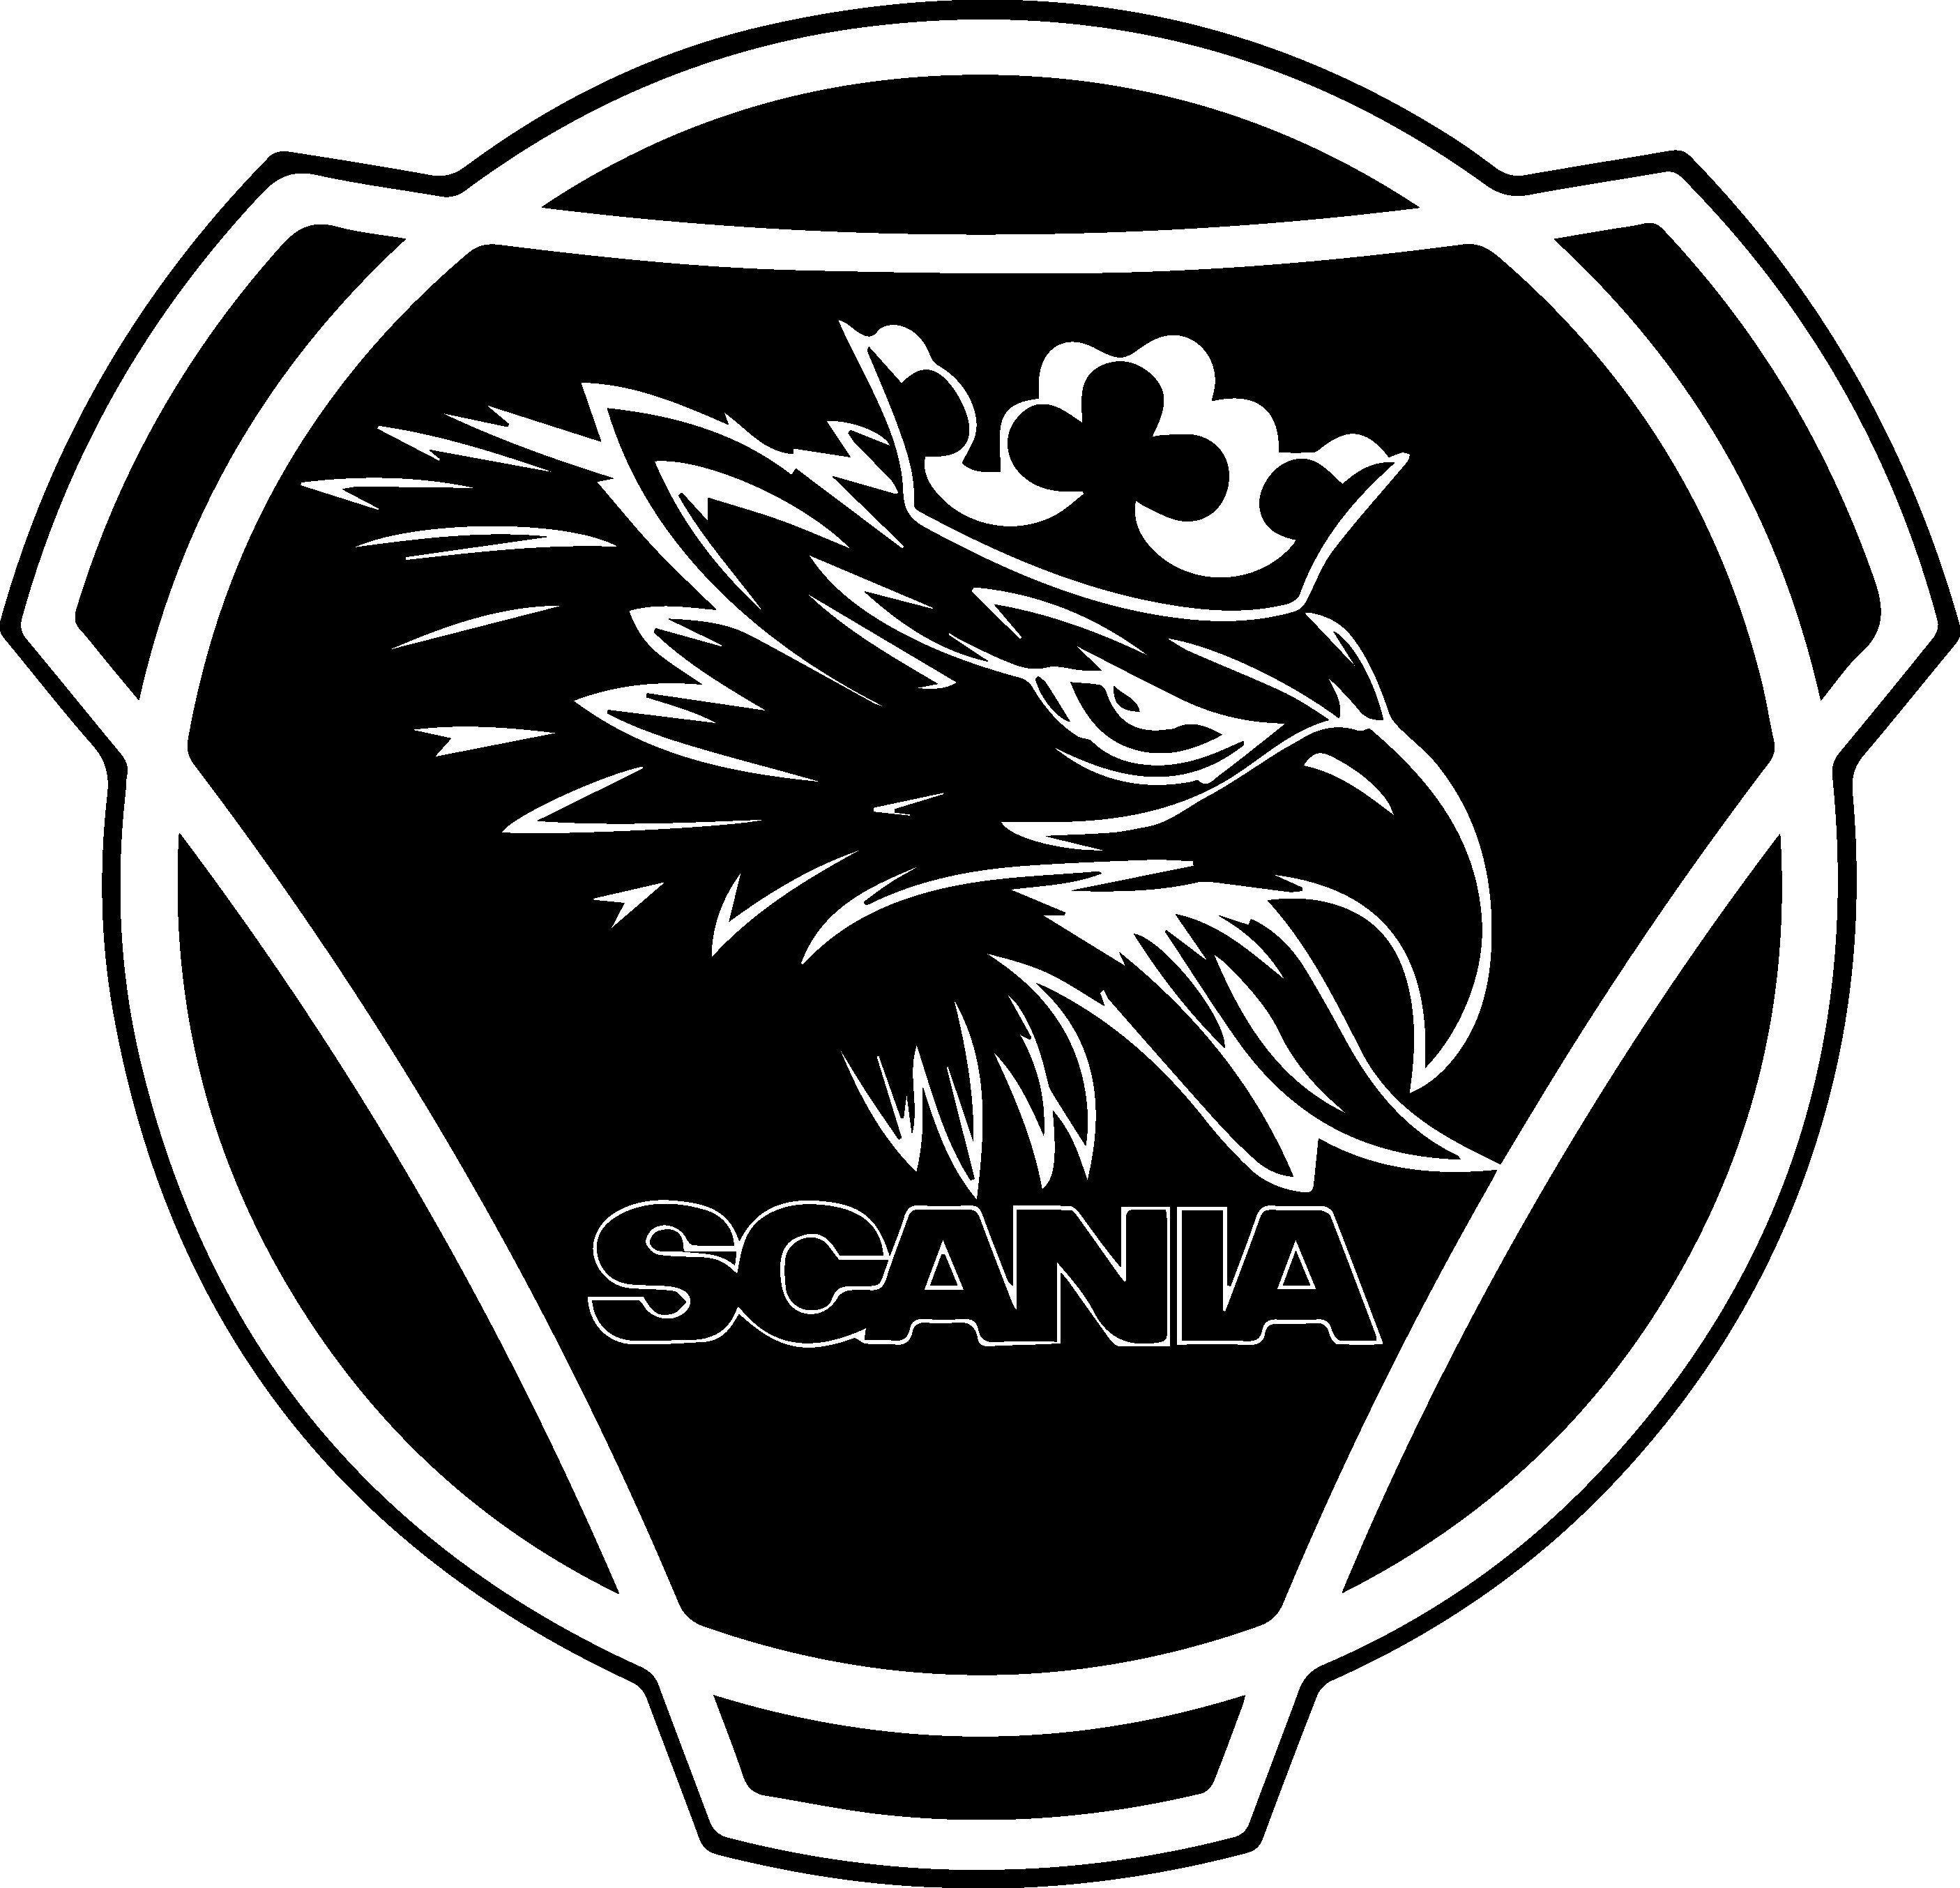 Логотип скания. Scania значок. Скания эмблема Грифон. Скания значок вектор. Герб Скания.